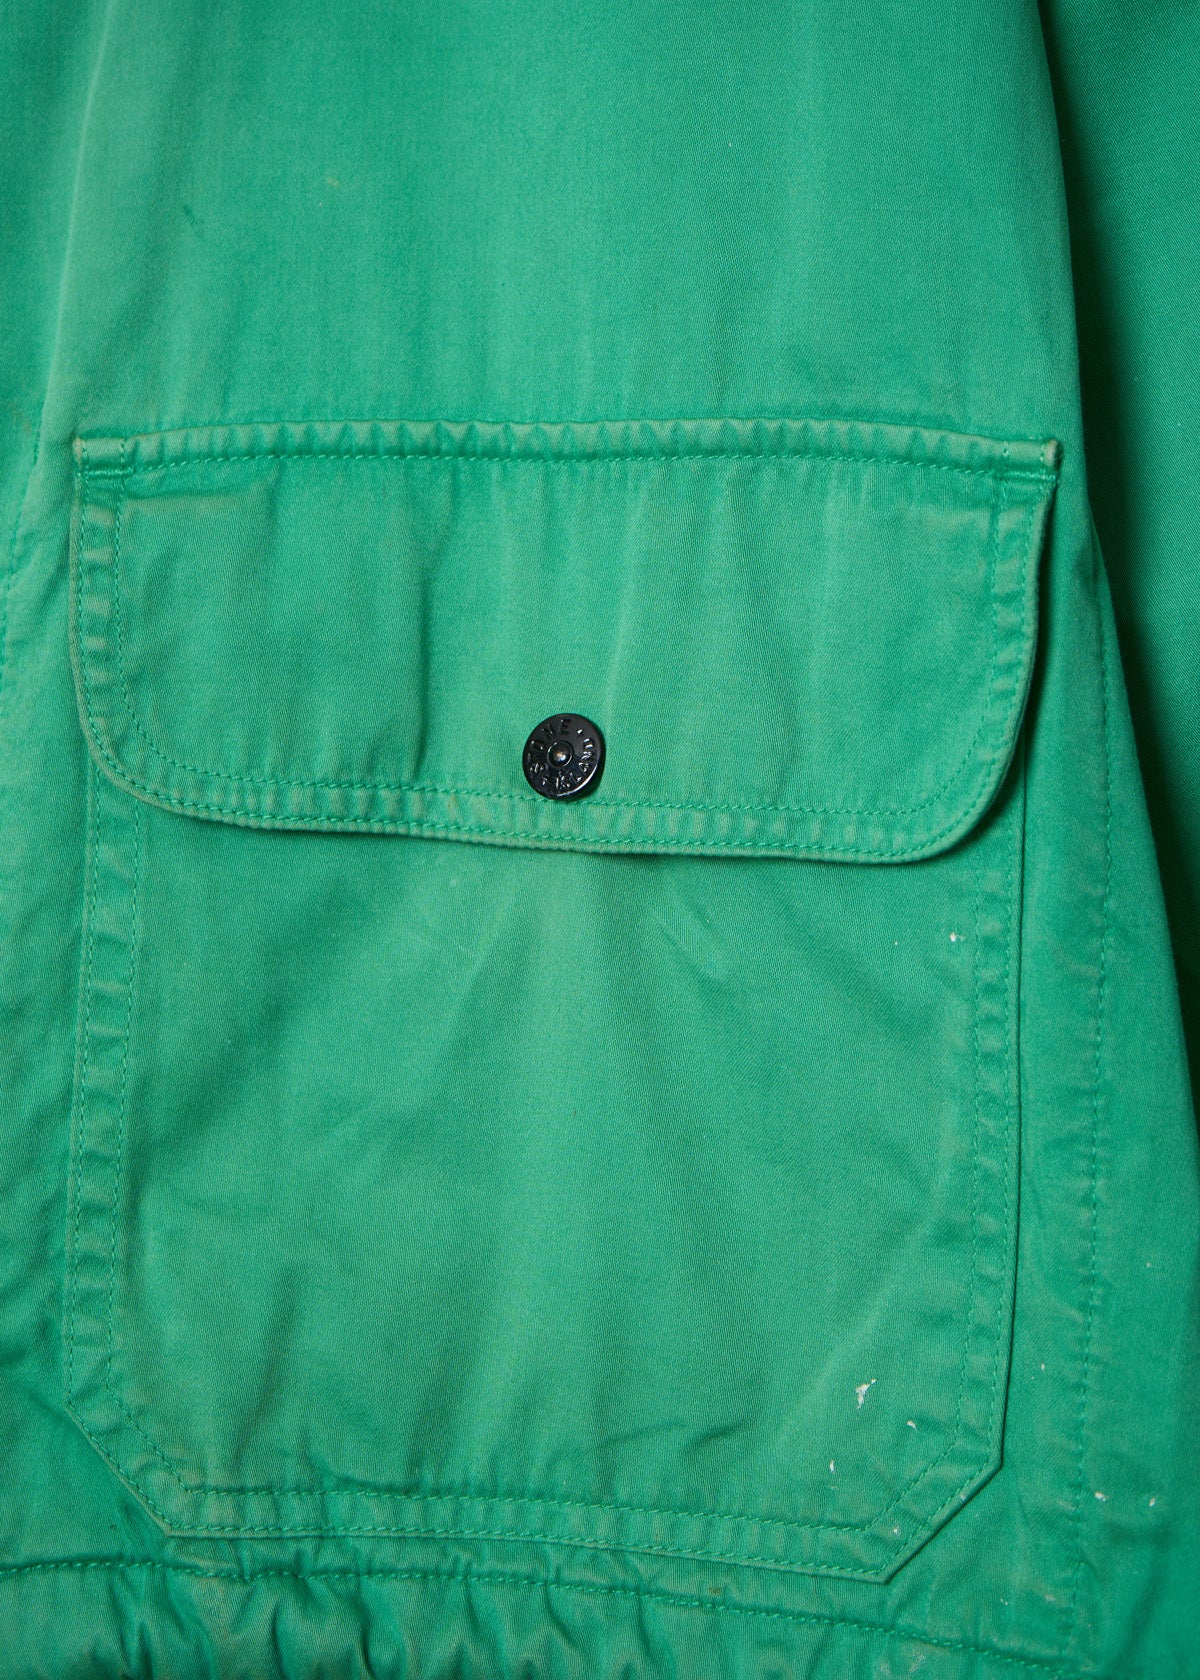 Green Life Safer Raso Gommato Jacket 1993 - Medium